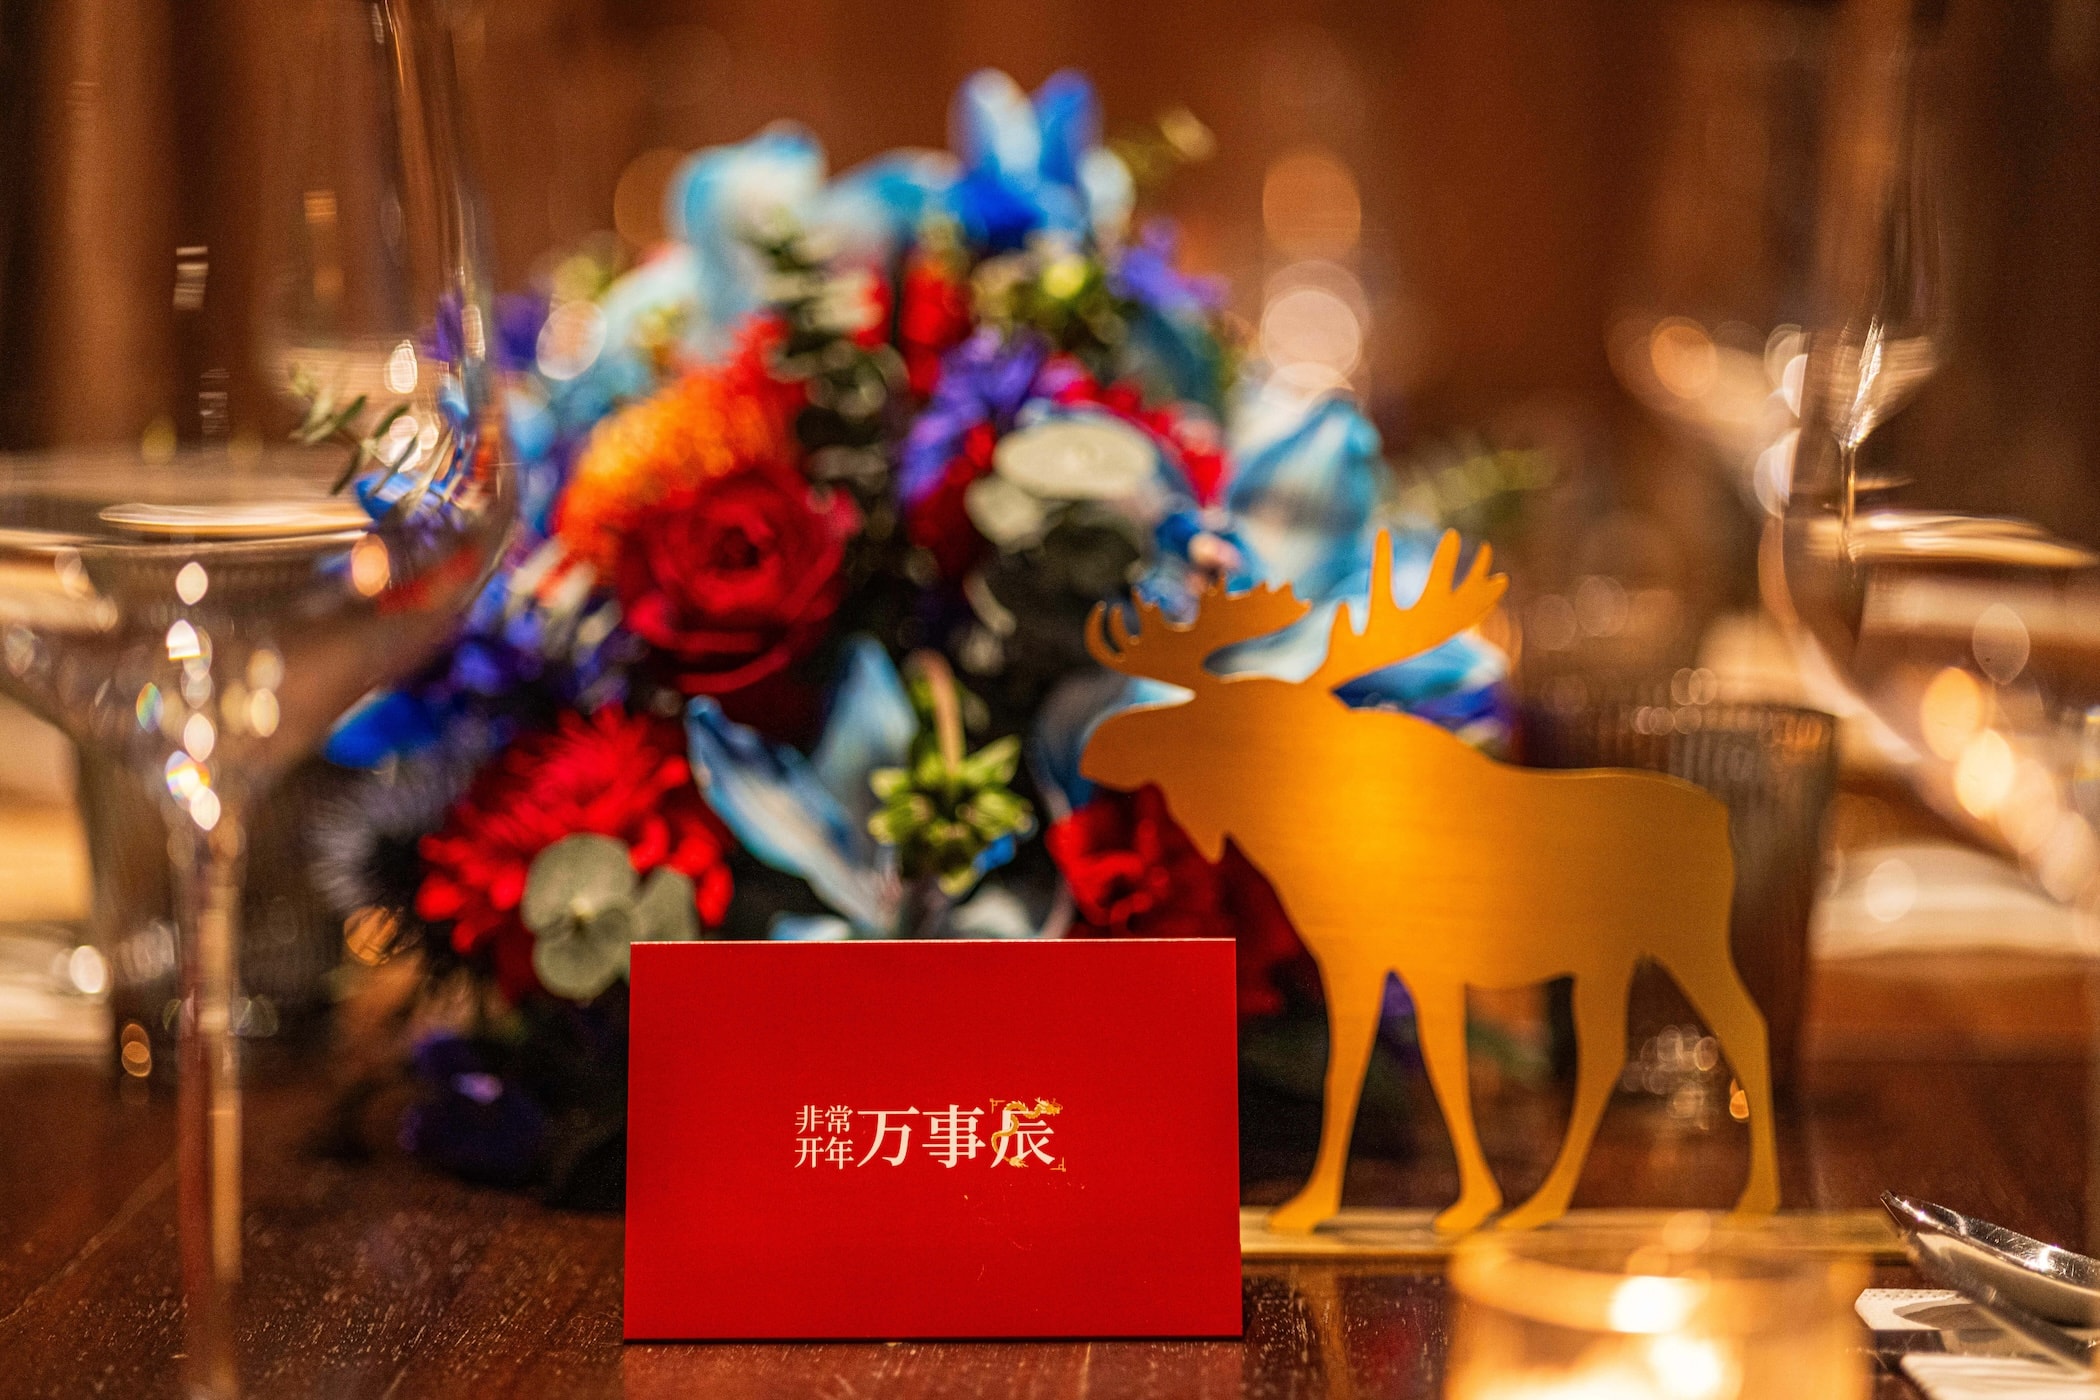 Abercrombie & Fitch 于上海举办新年晚宴